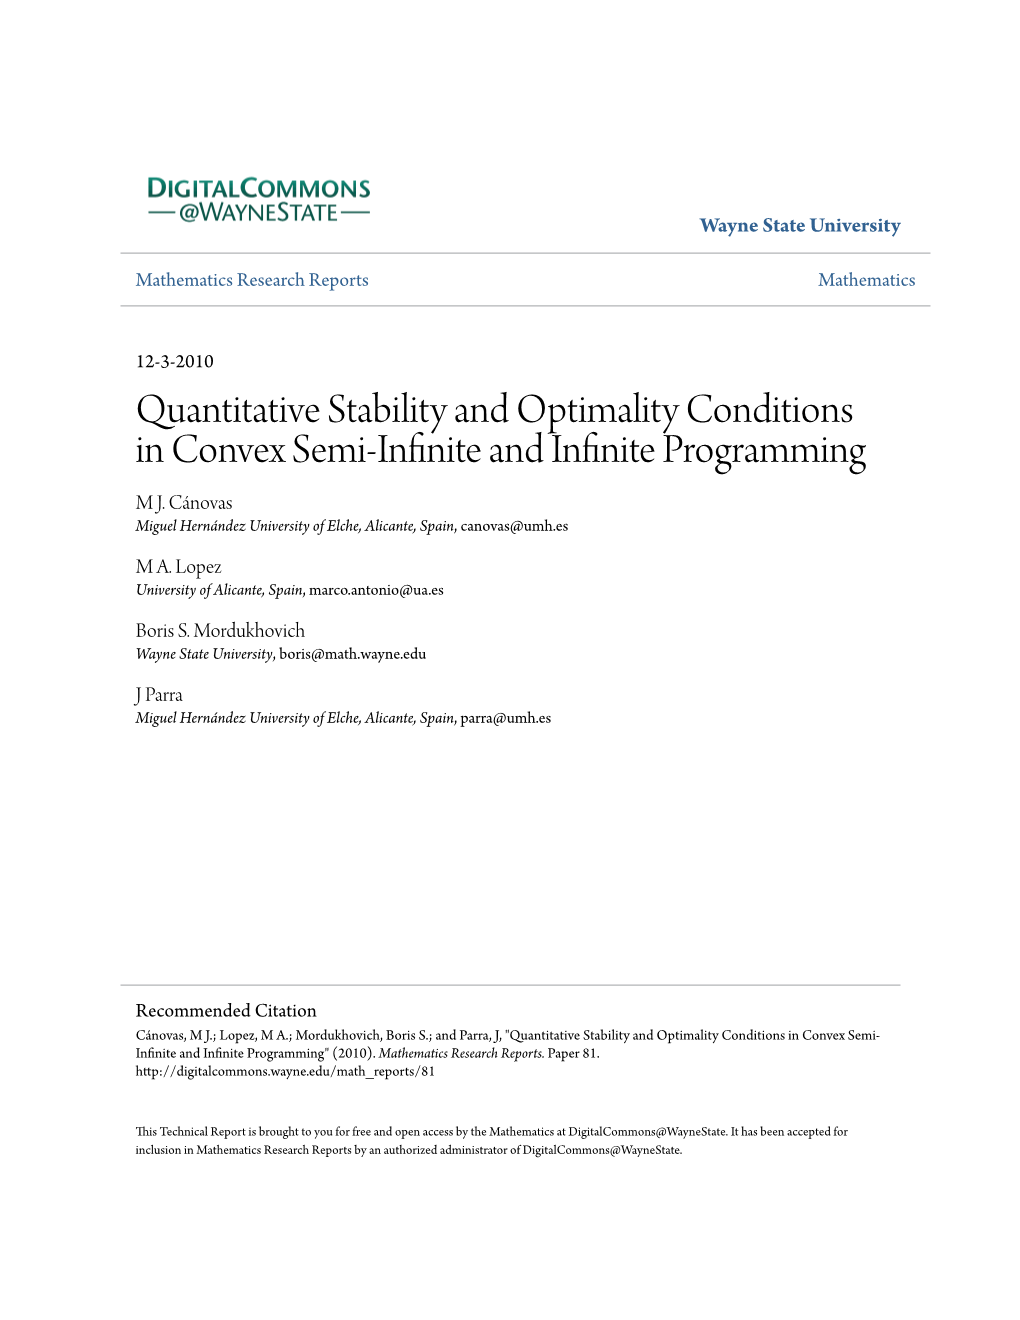 Quantitative Stability and Optimality Conditions in Convex Semi-Infinite and Infinite Programming M J